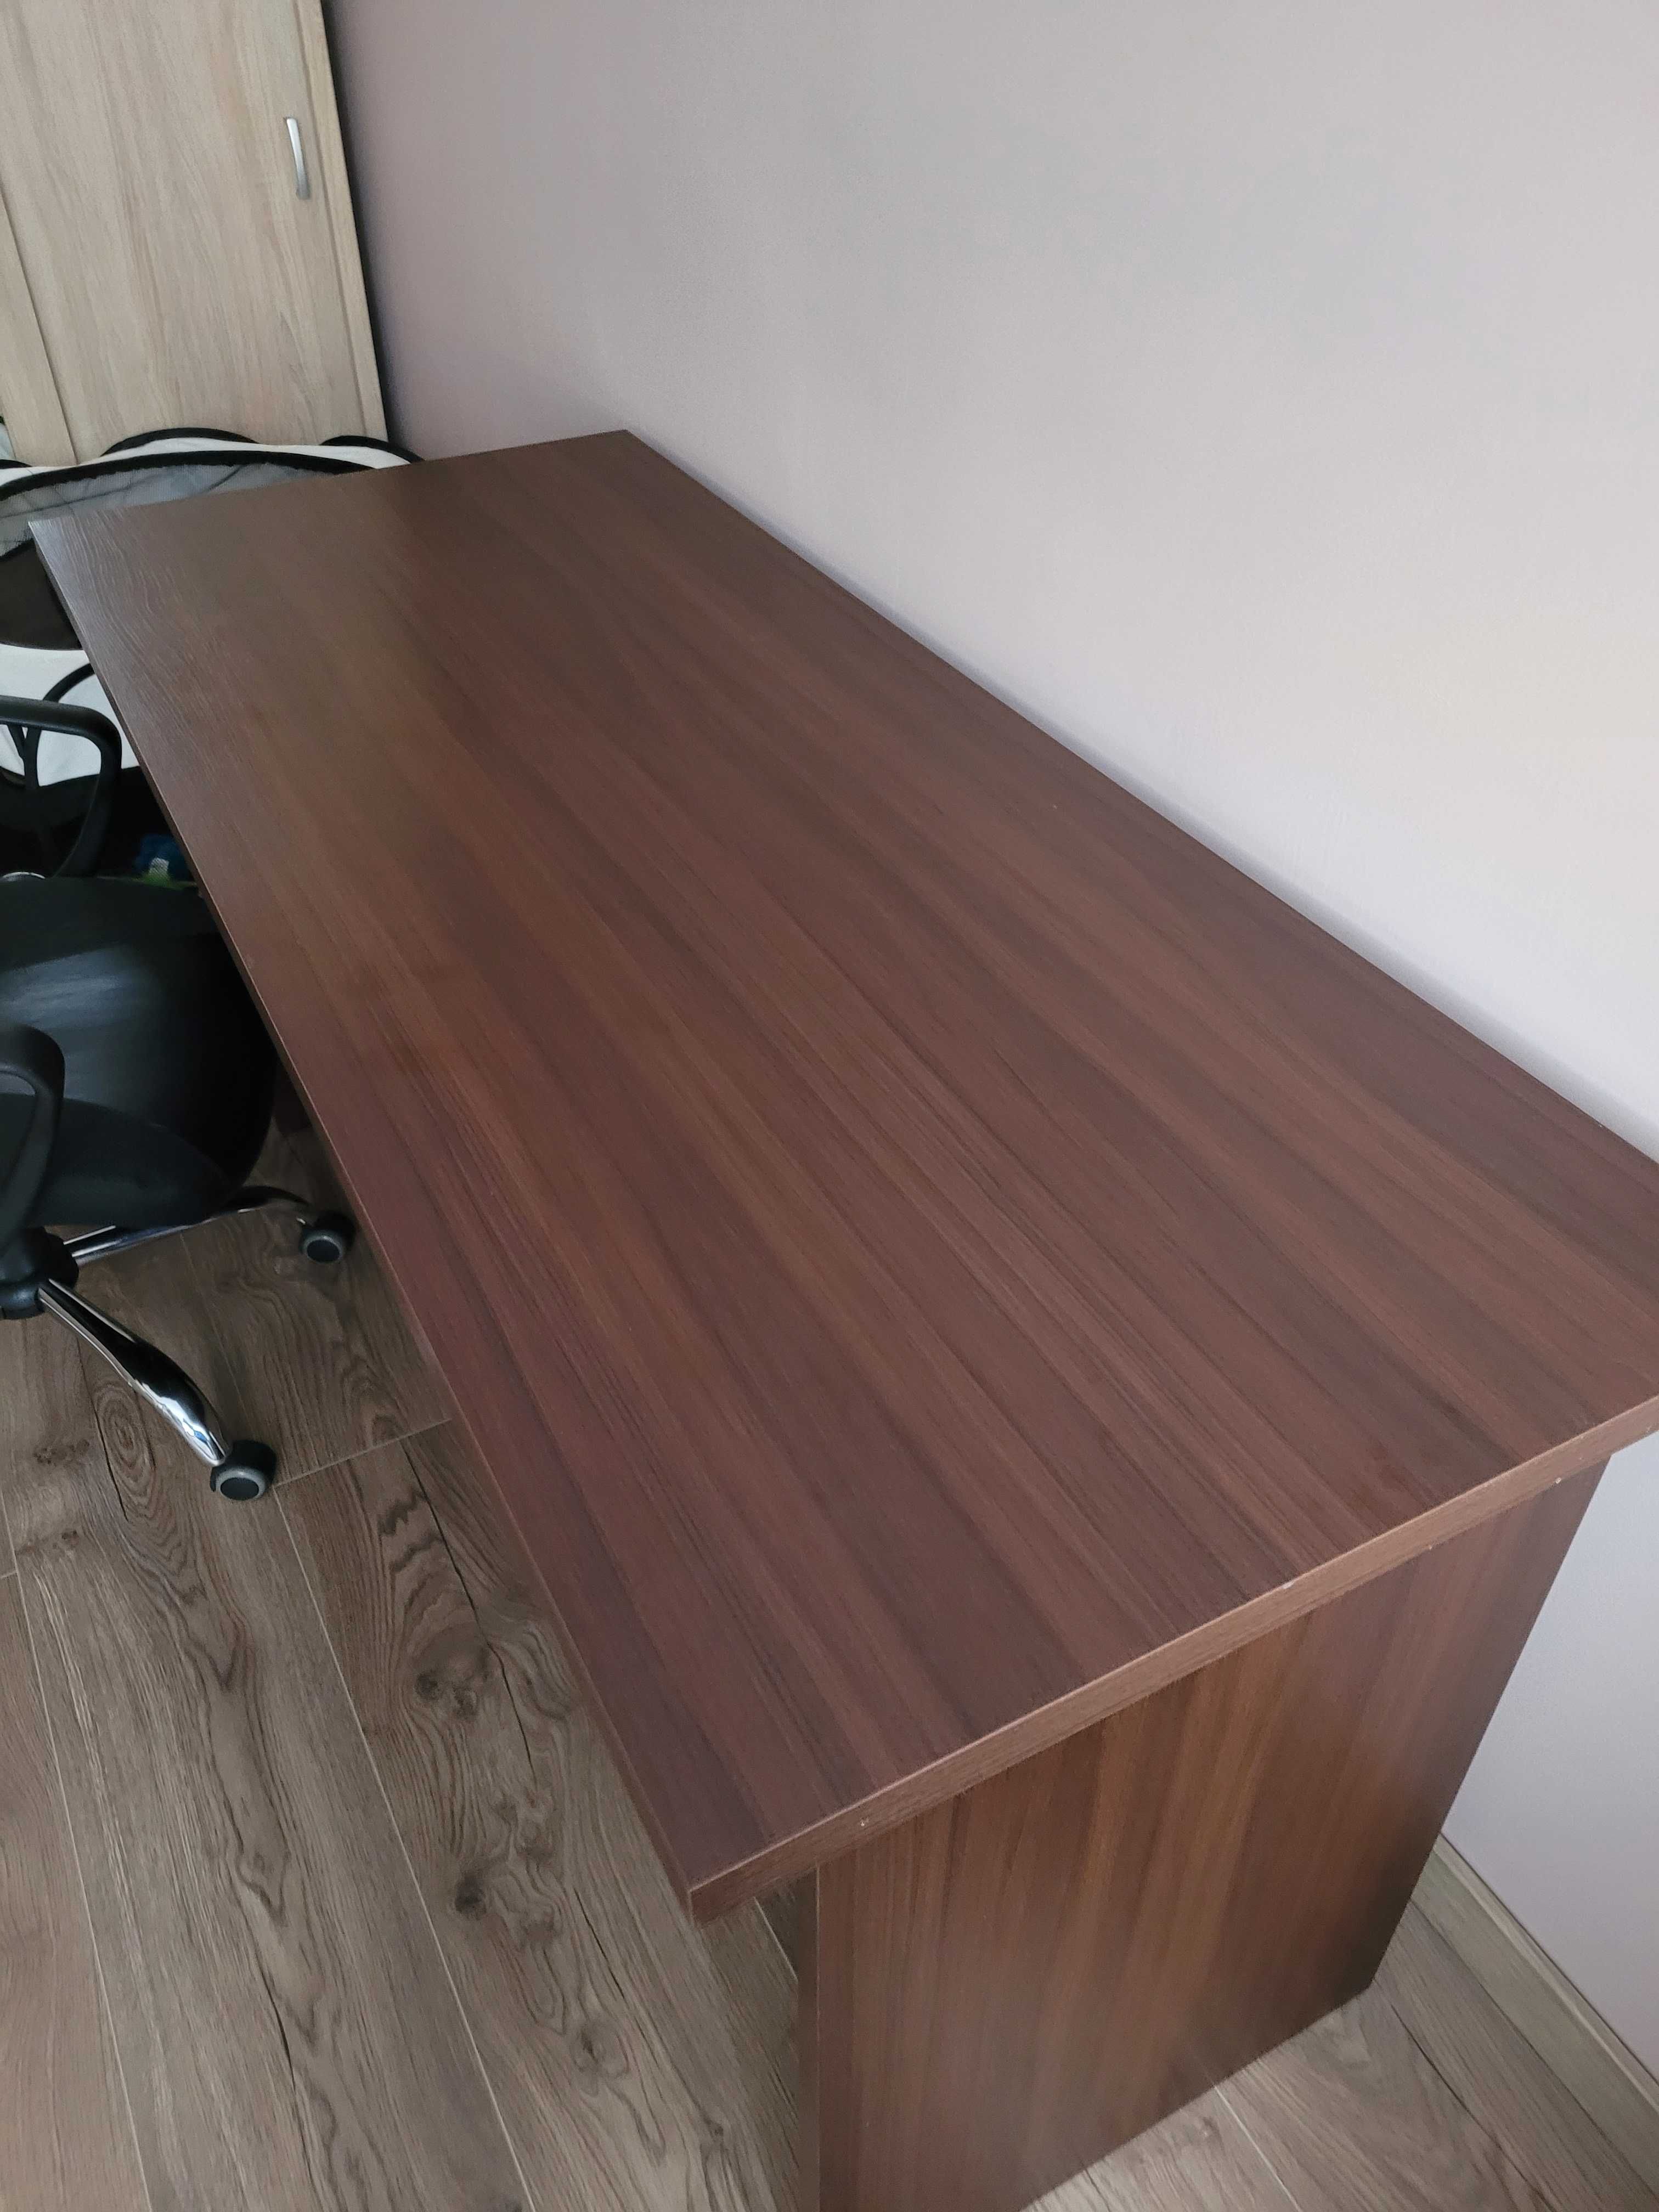 Duże biurko. Idealne dla nastolatka lub na studia